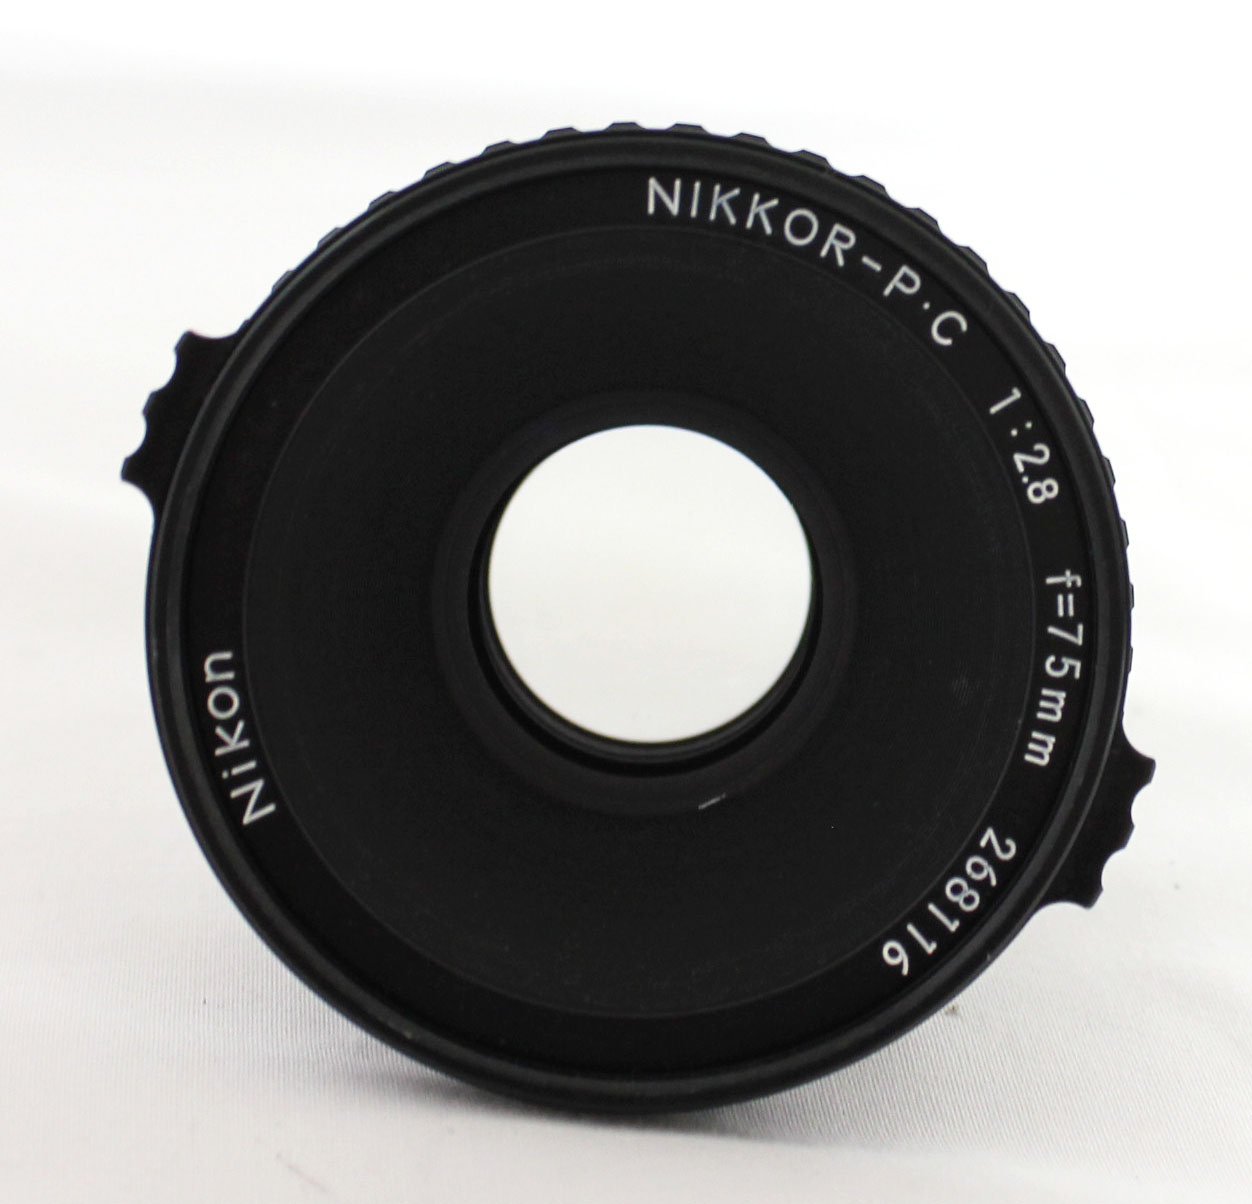  Zenza Bronica EC 6x6 Medium Format Camera w/ Nikkor-P.C 75mm F/2.8 Lens from Japan Photo 12